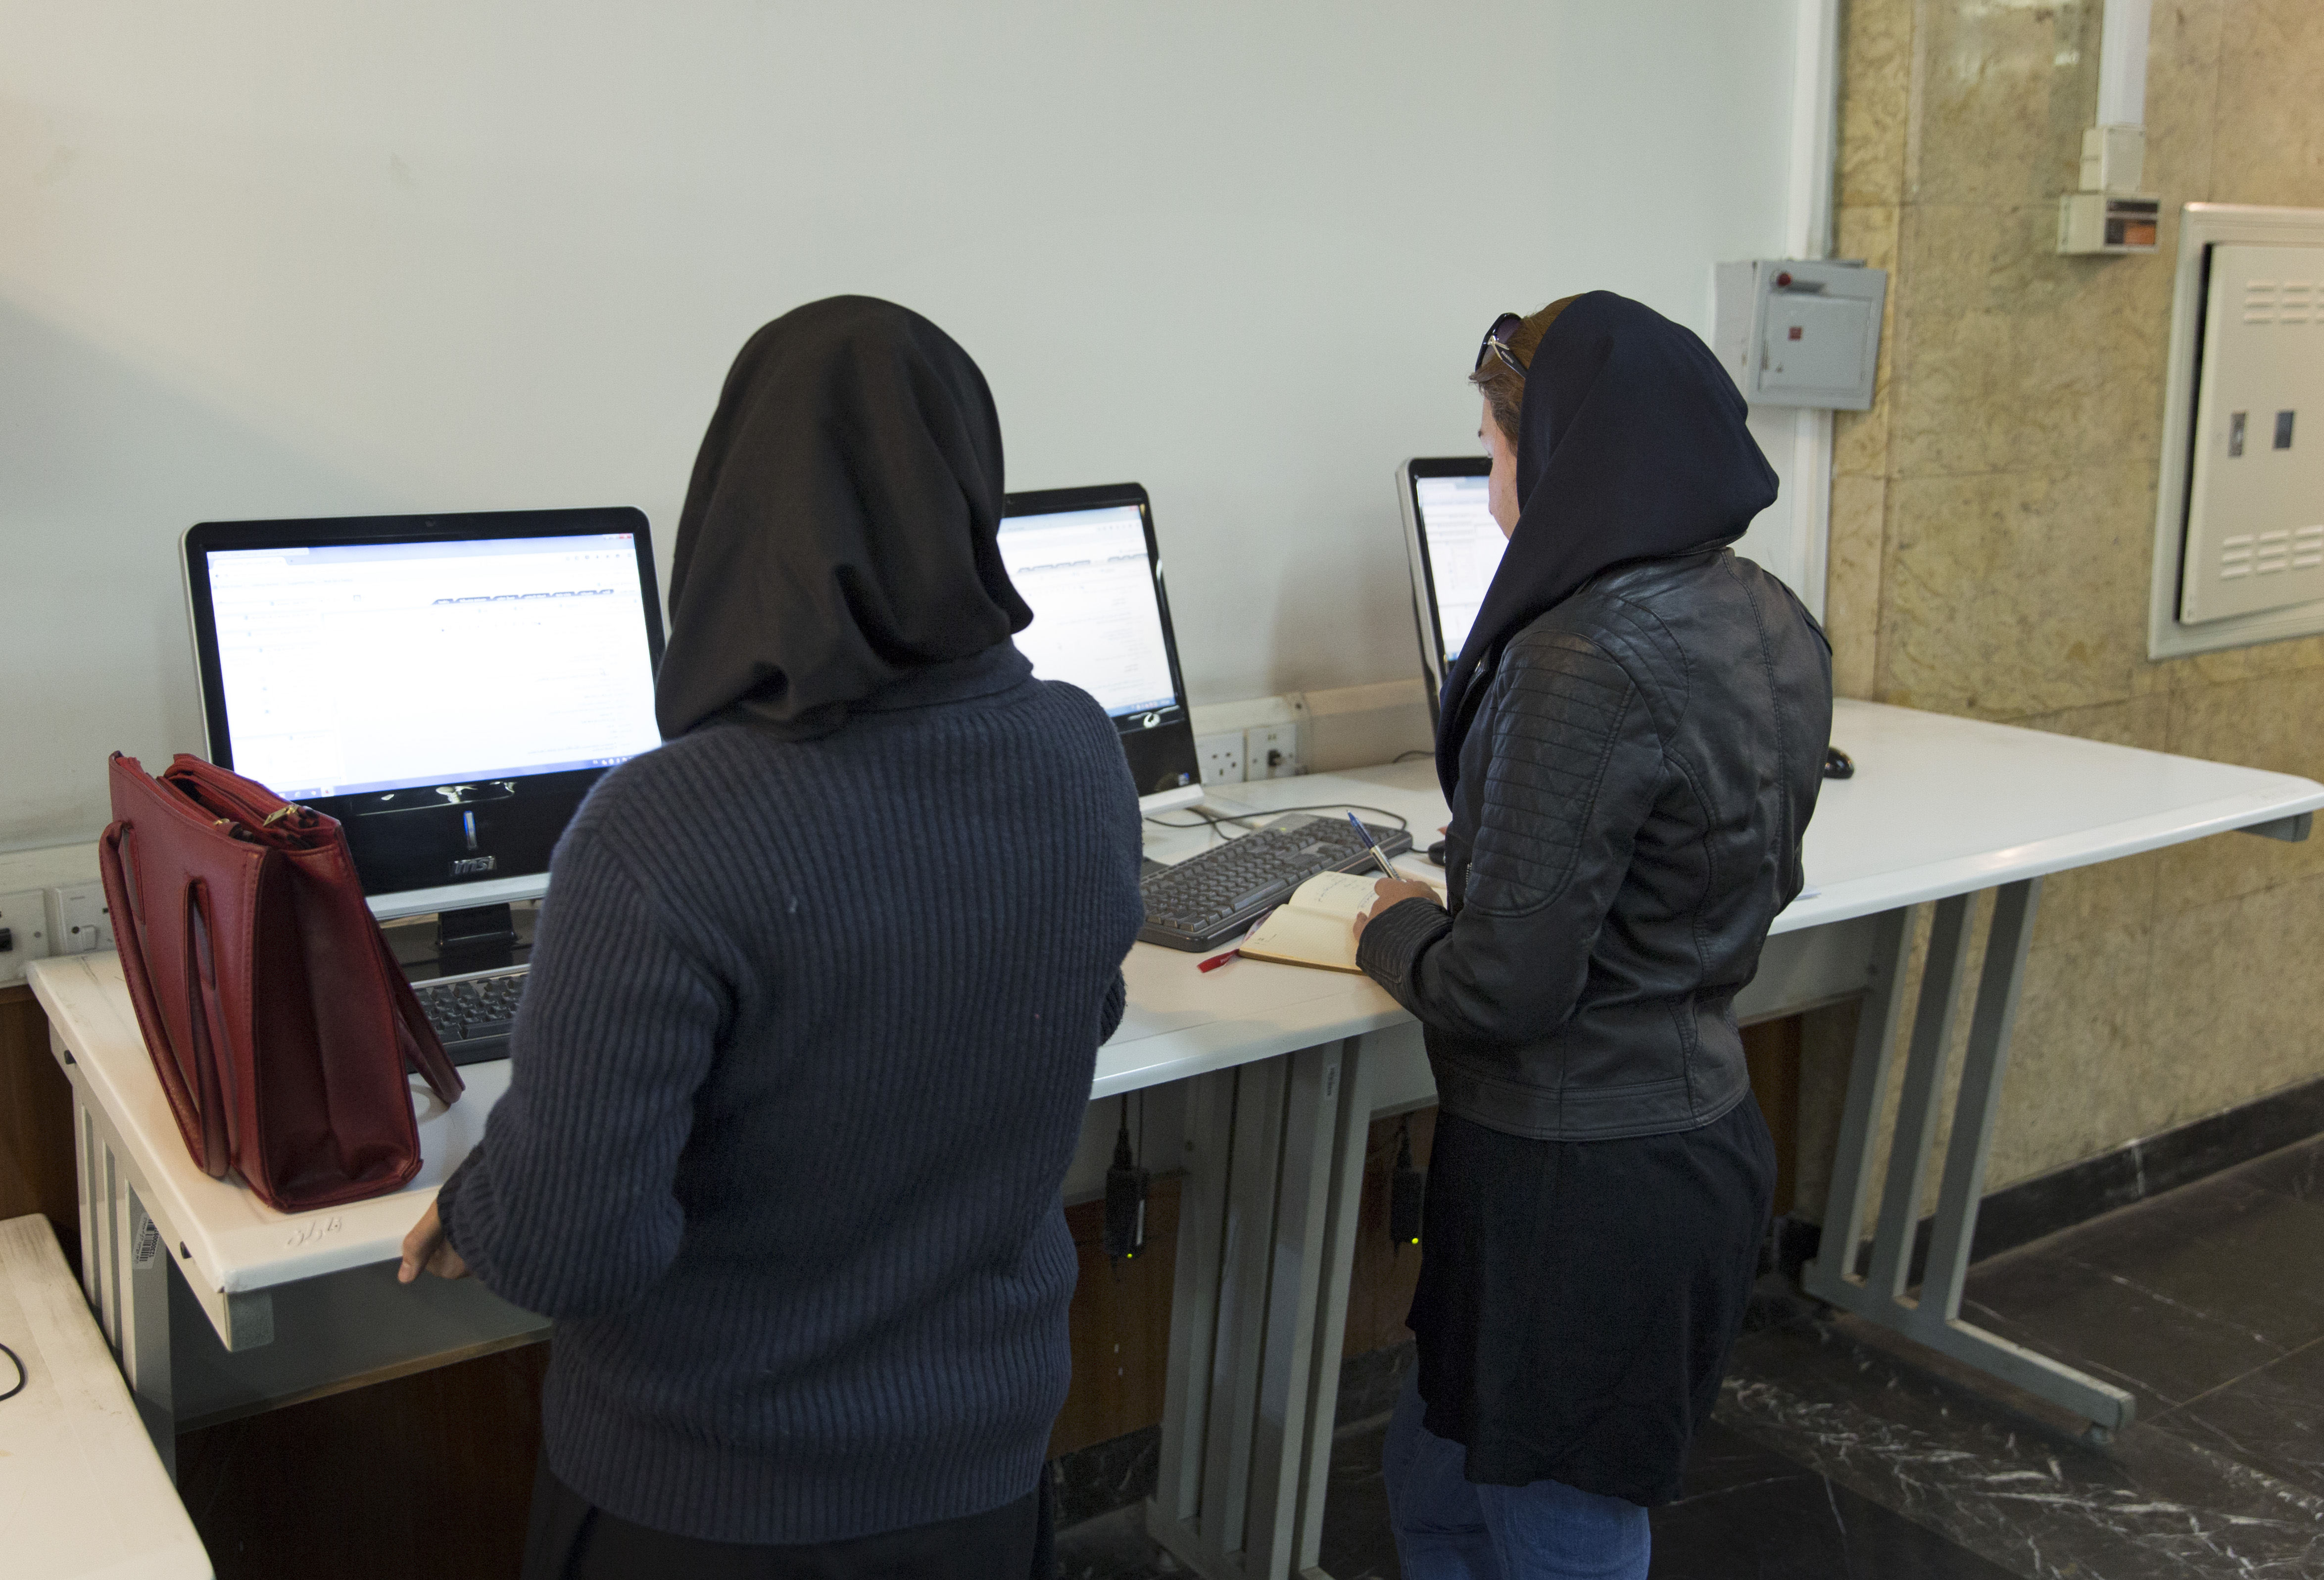 Students work with computers at Teheran University on October 18, 2015 in Teheran, Iran. (Thomas Koehler—Photothek/Getty Images)